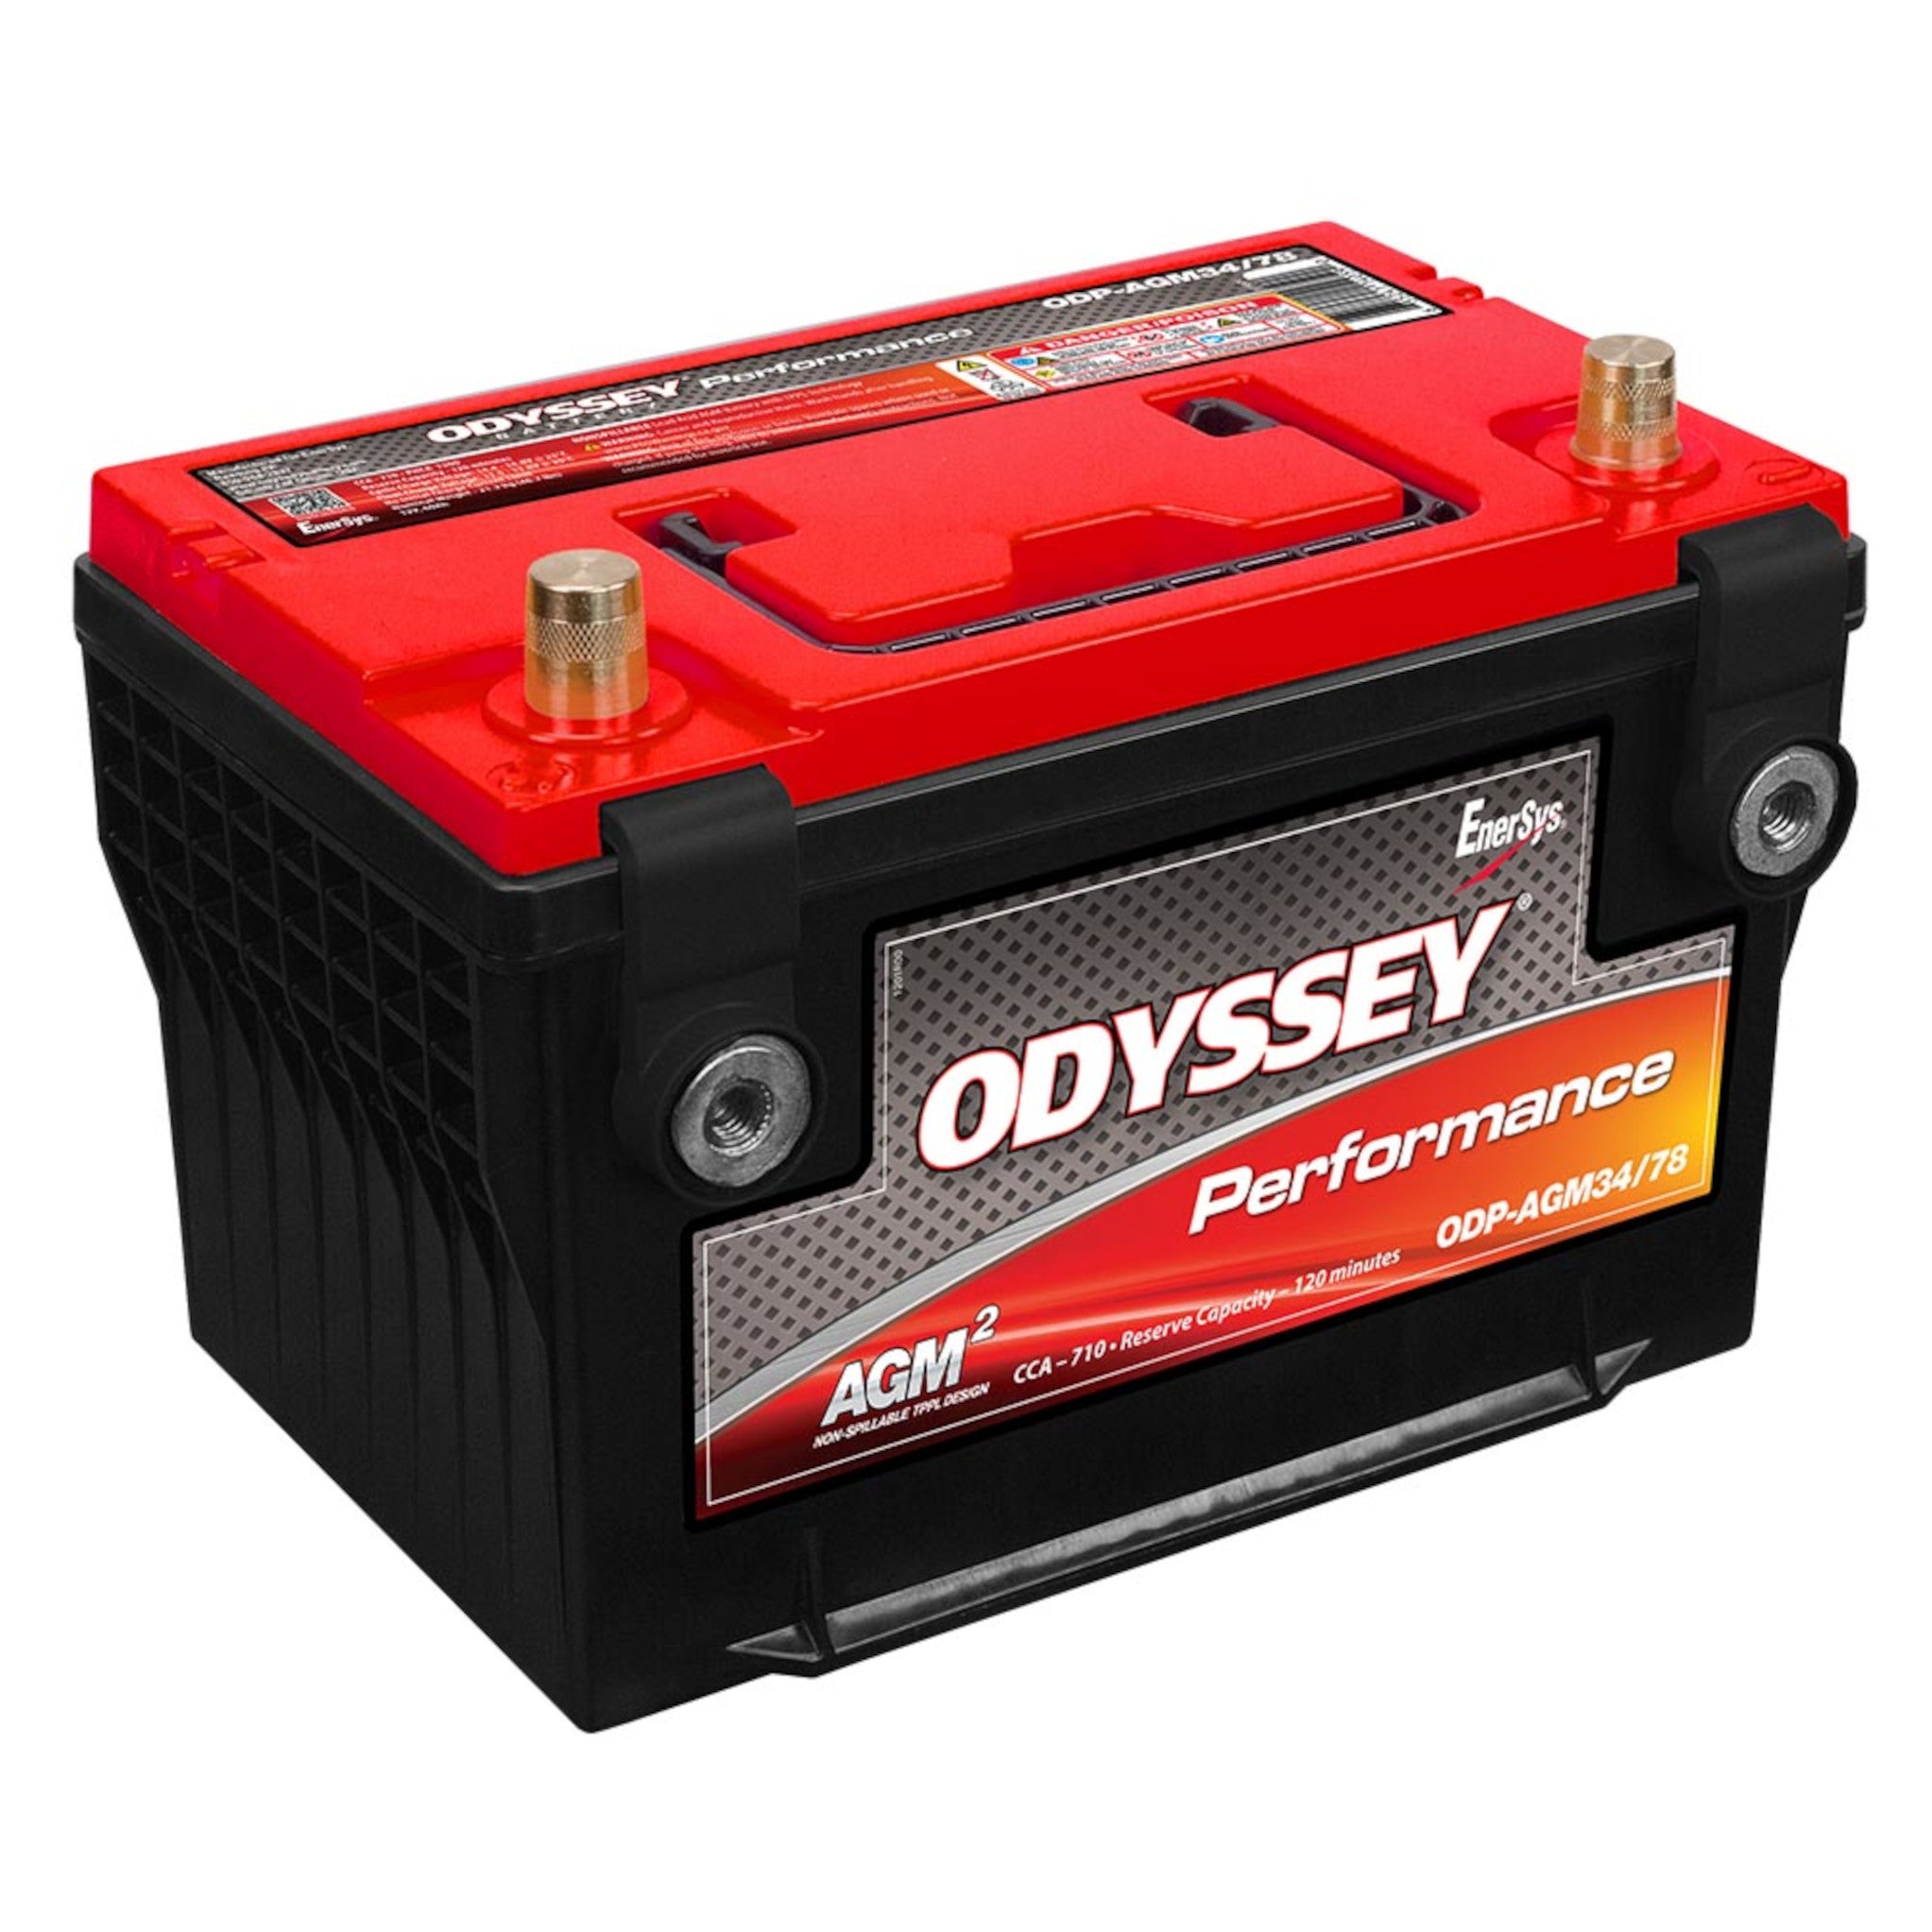 Odyssey ODP-AGM34/78 12V Group 34/78 AGM Truck Battery